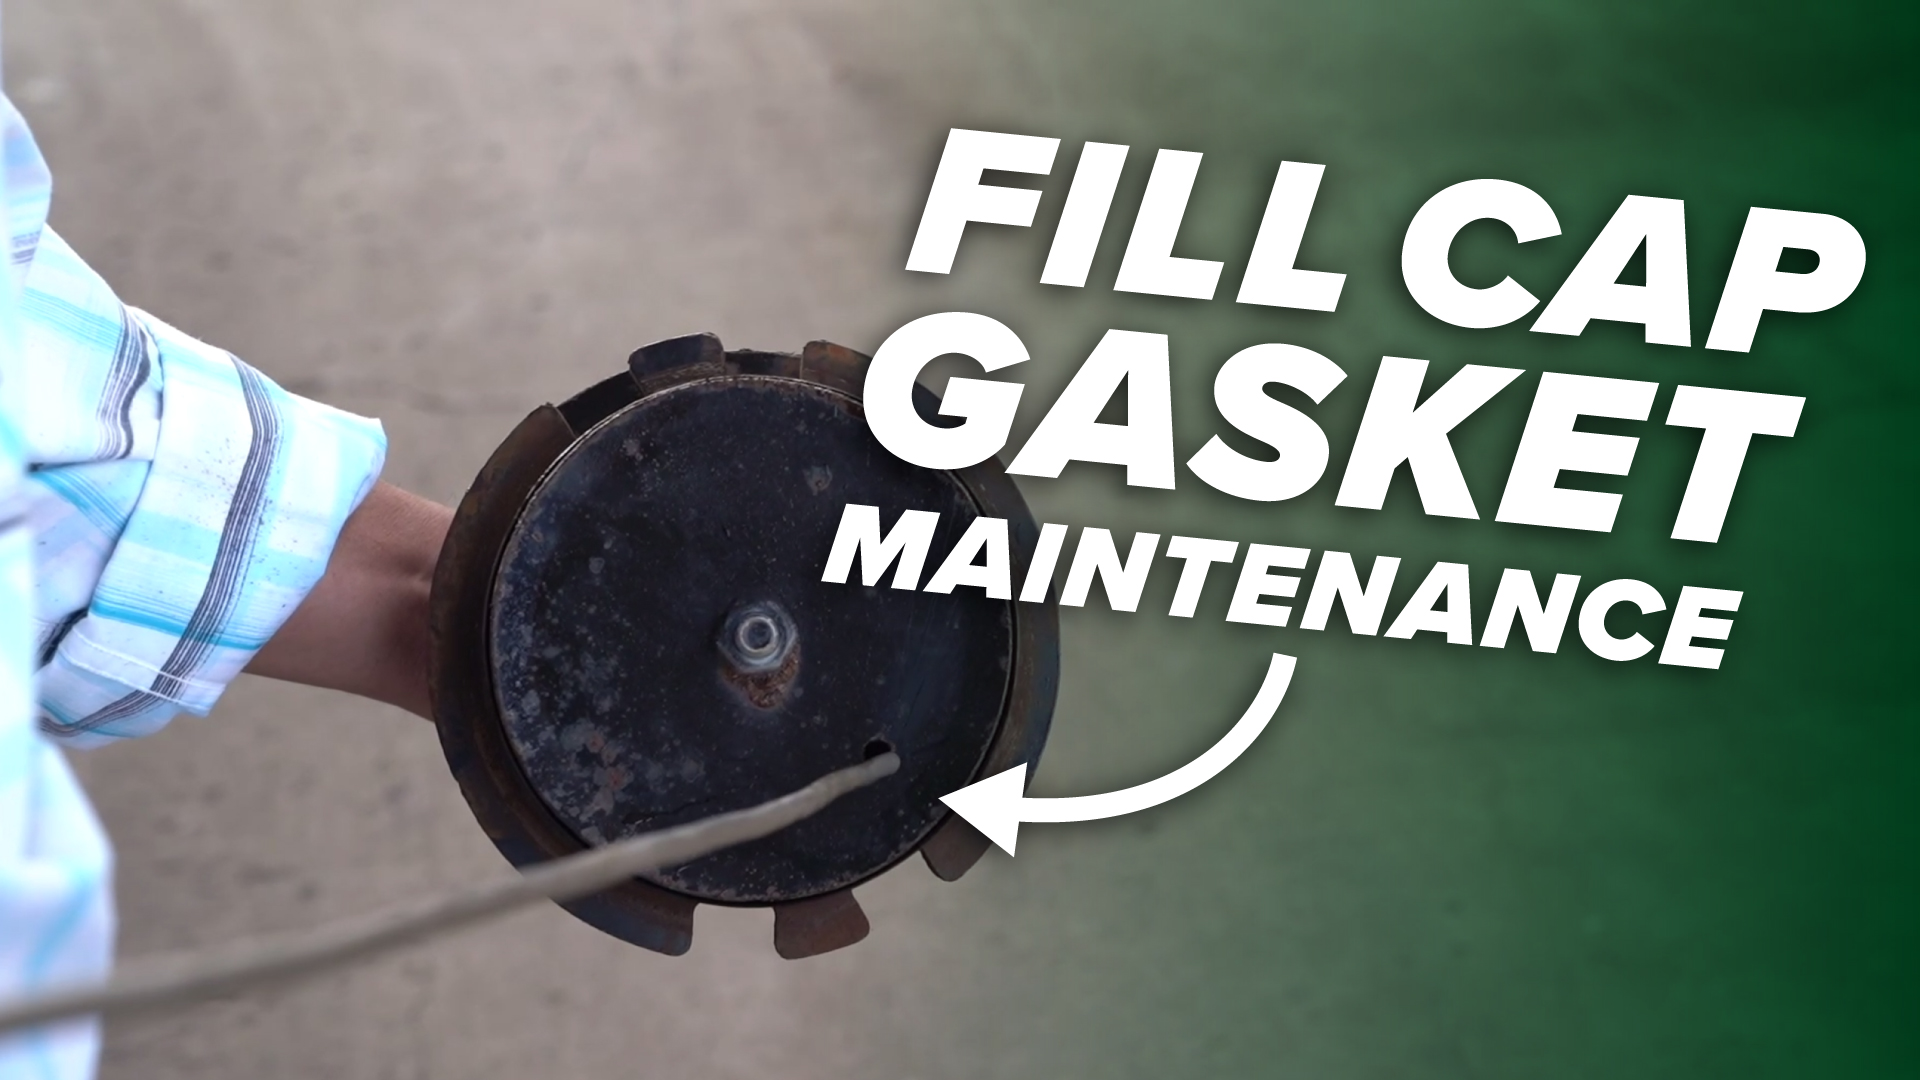 DB-Academy - Fill Cap Gasket Maintenance